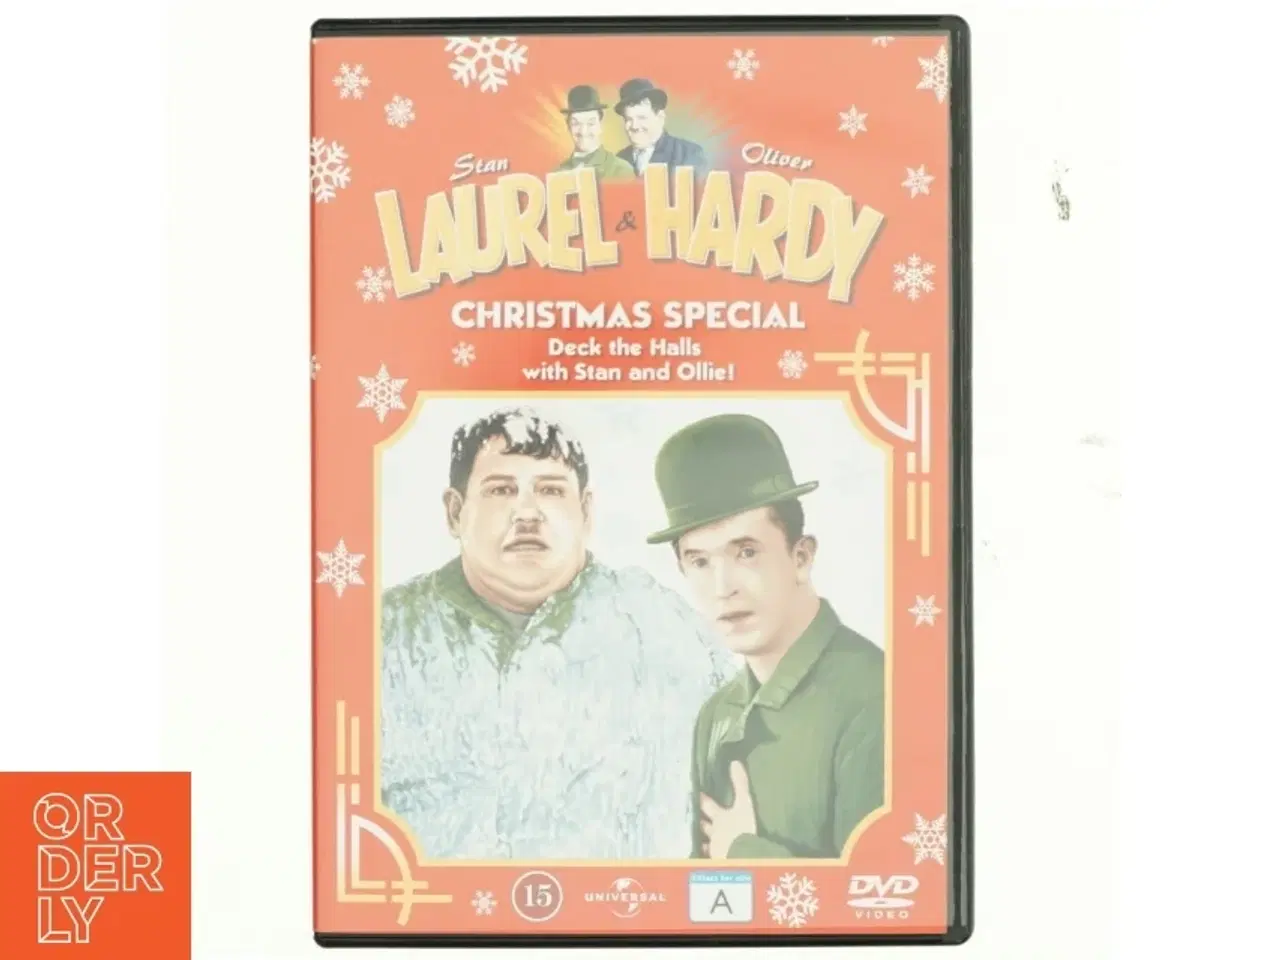 Billede 1 - Laurel & Hardy, Christmas special